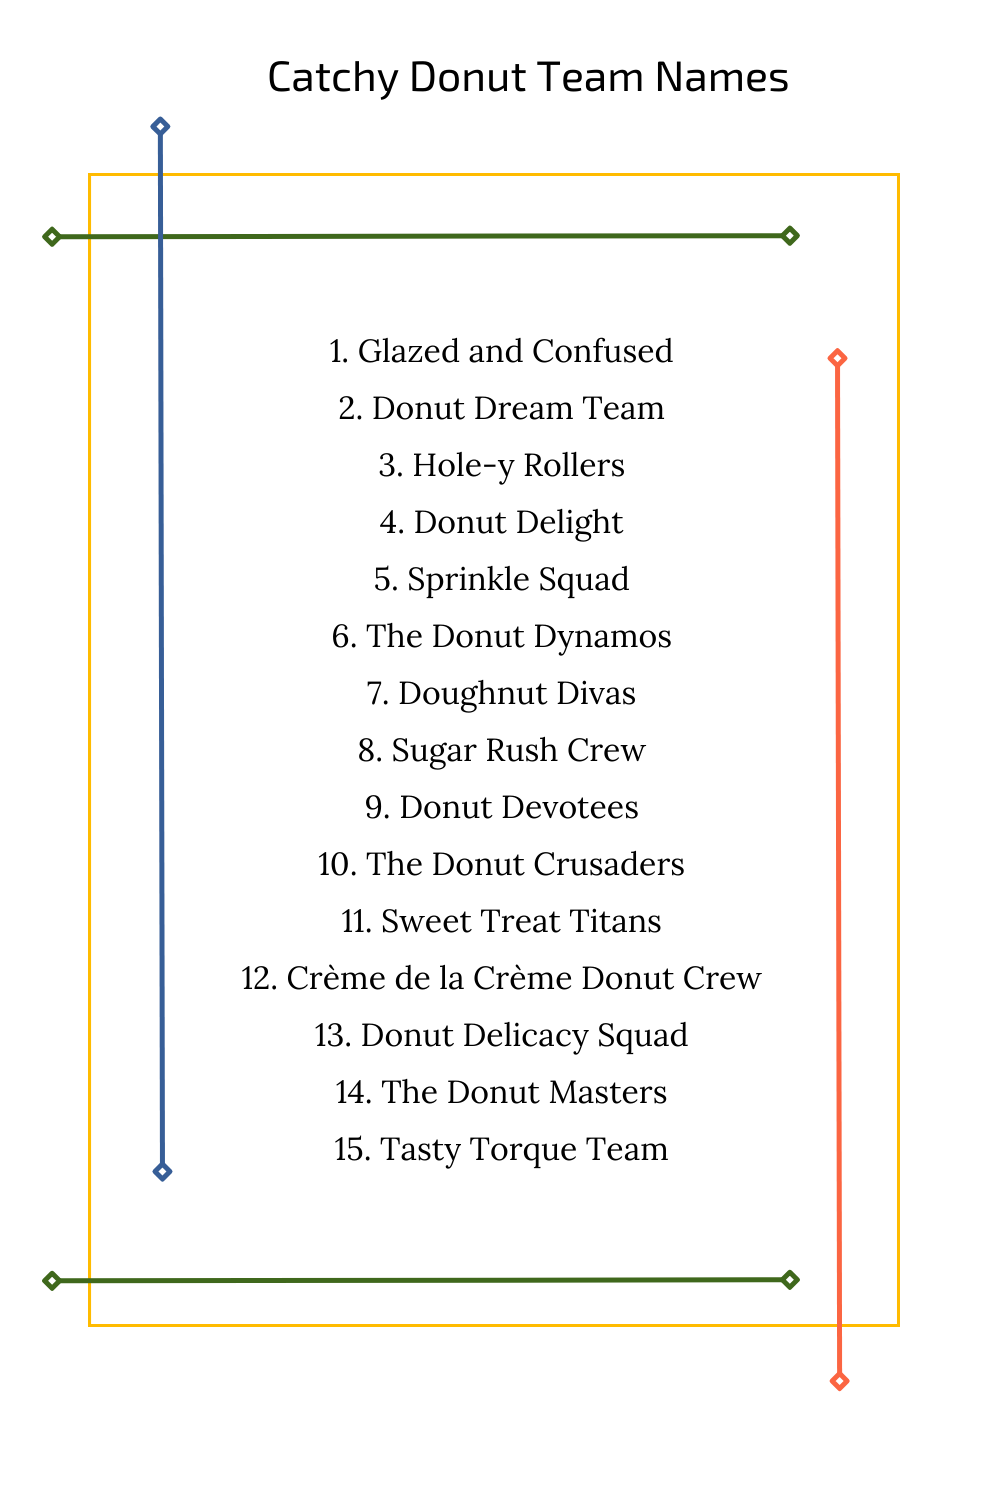 Catchy Donut Team Names